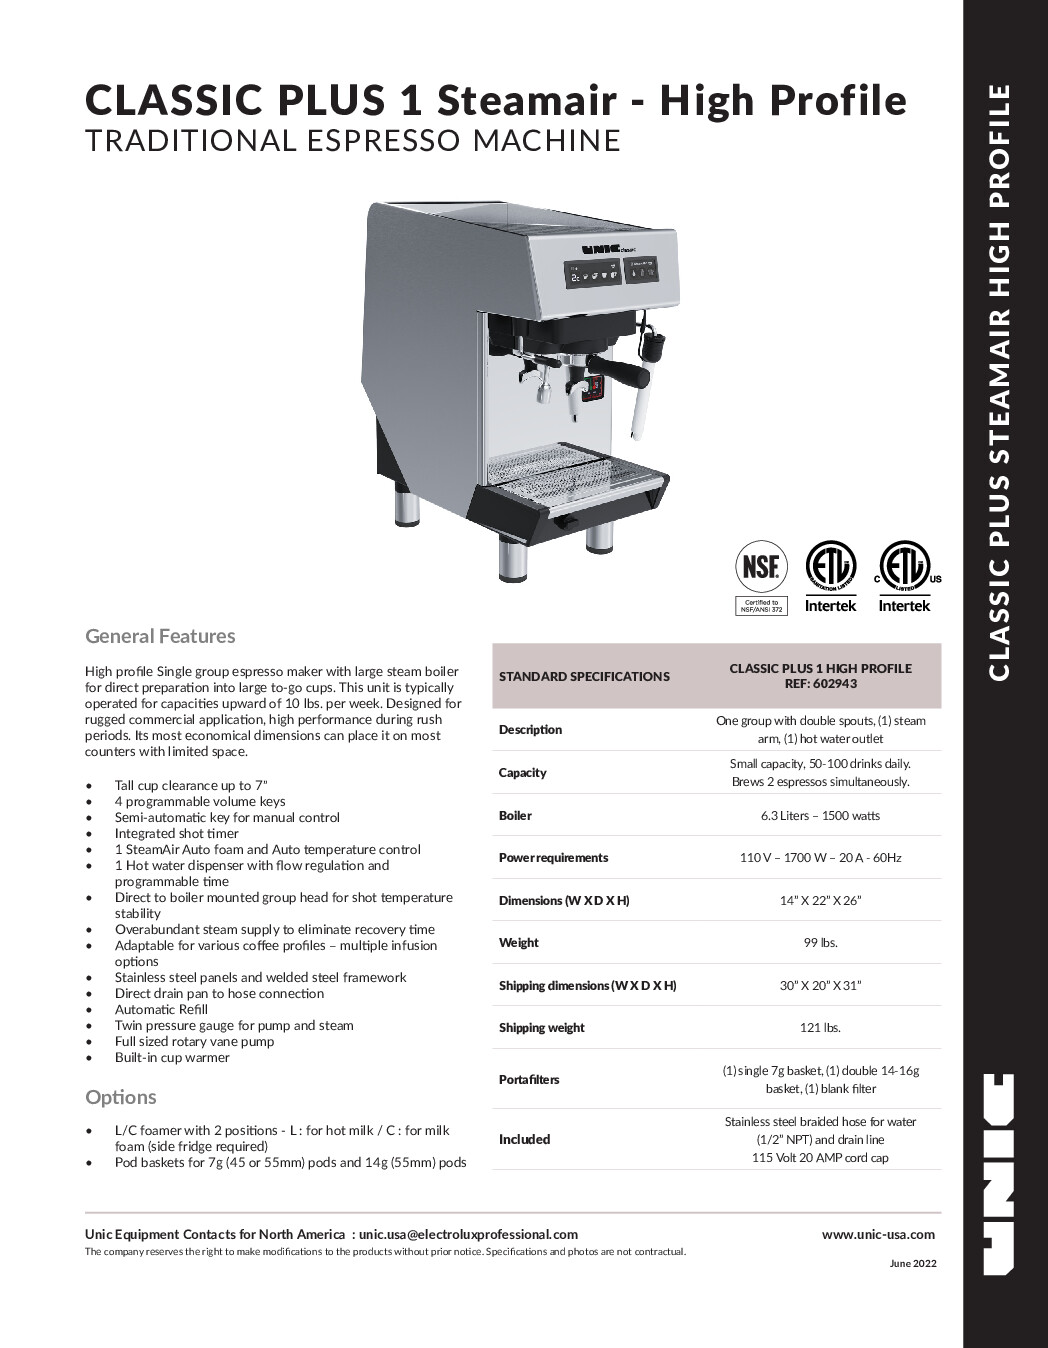 Grindmaster-UNIC-Crathco CLASSIC 1 HPSA Espresso Cappuccino Machine